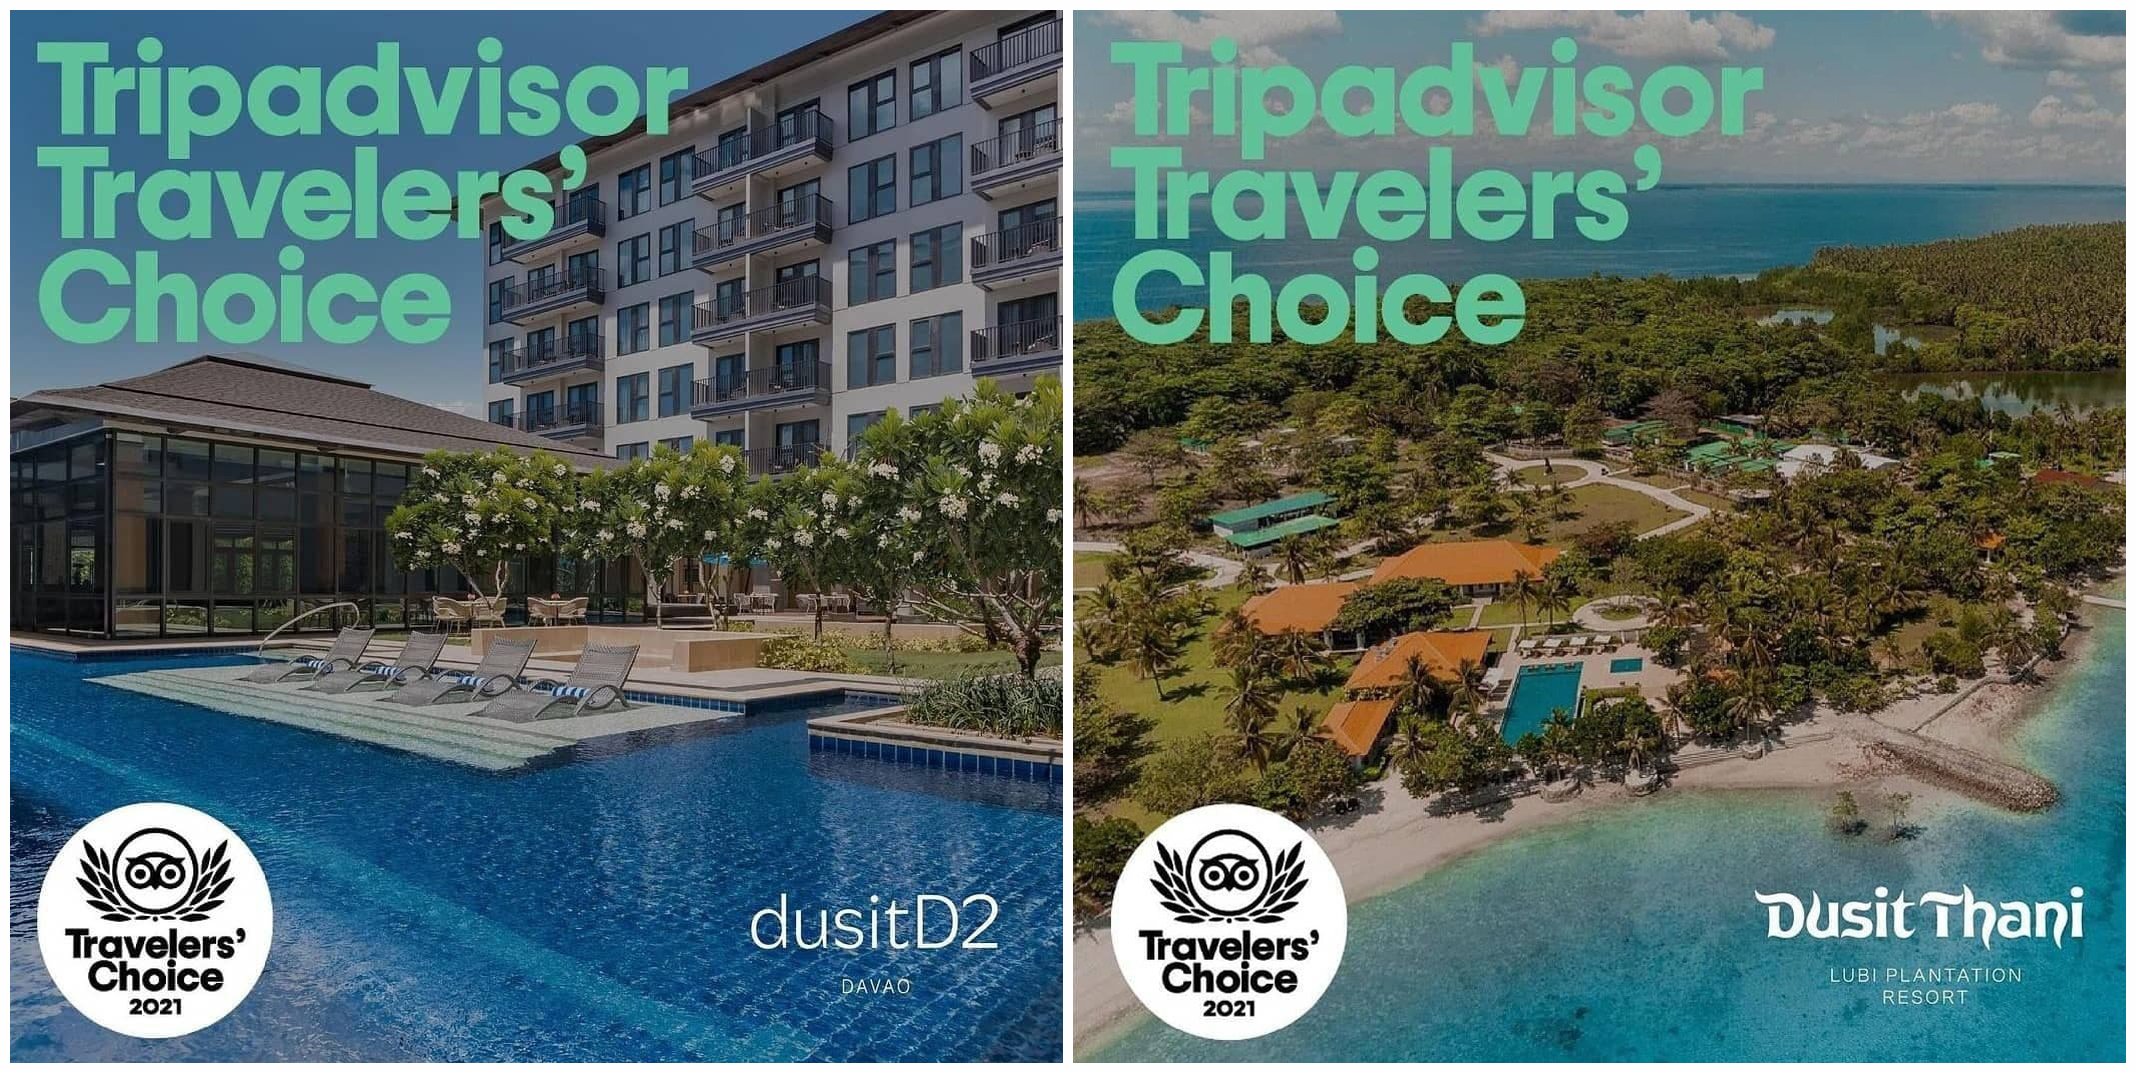 dusitD2 Davao and Dusit Thani Lubi Plantation Resort receive Tripadvisor Travelers' Choice 2021 awards